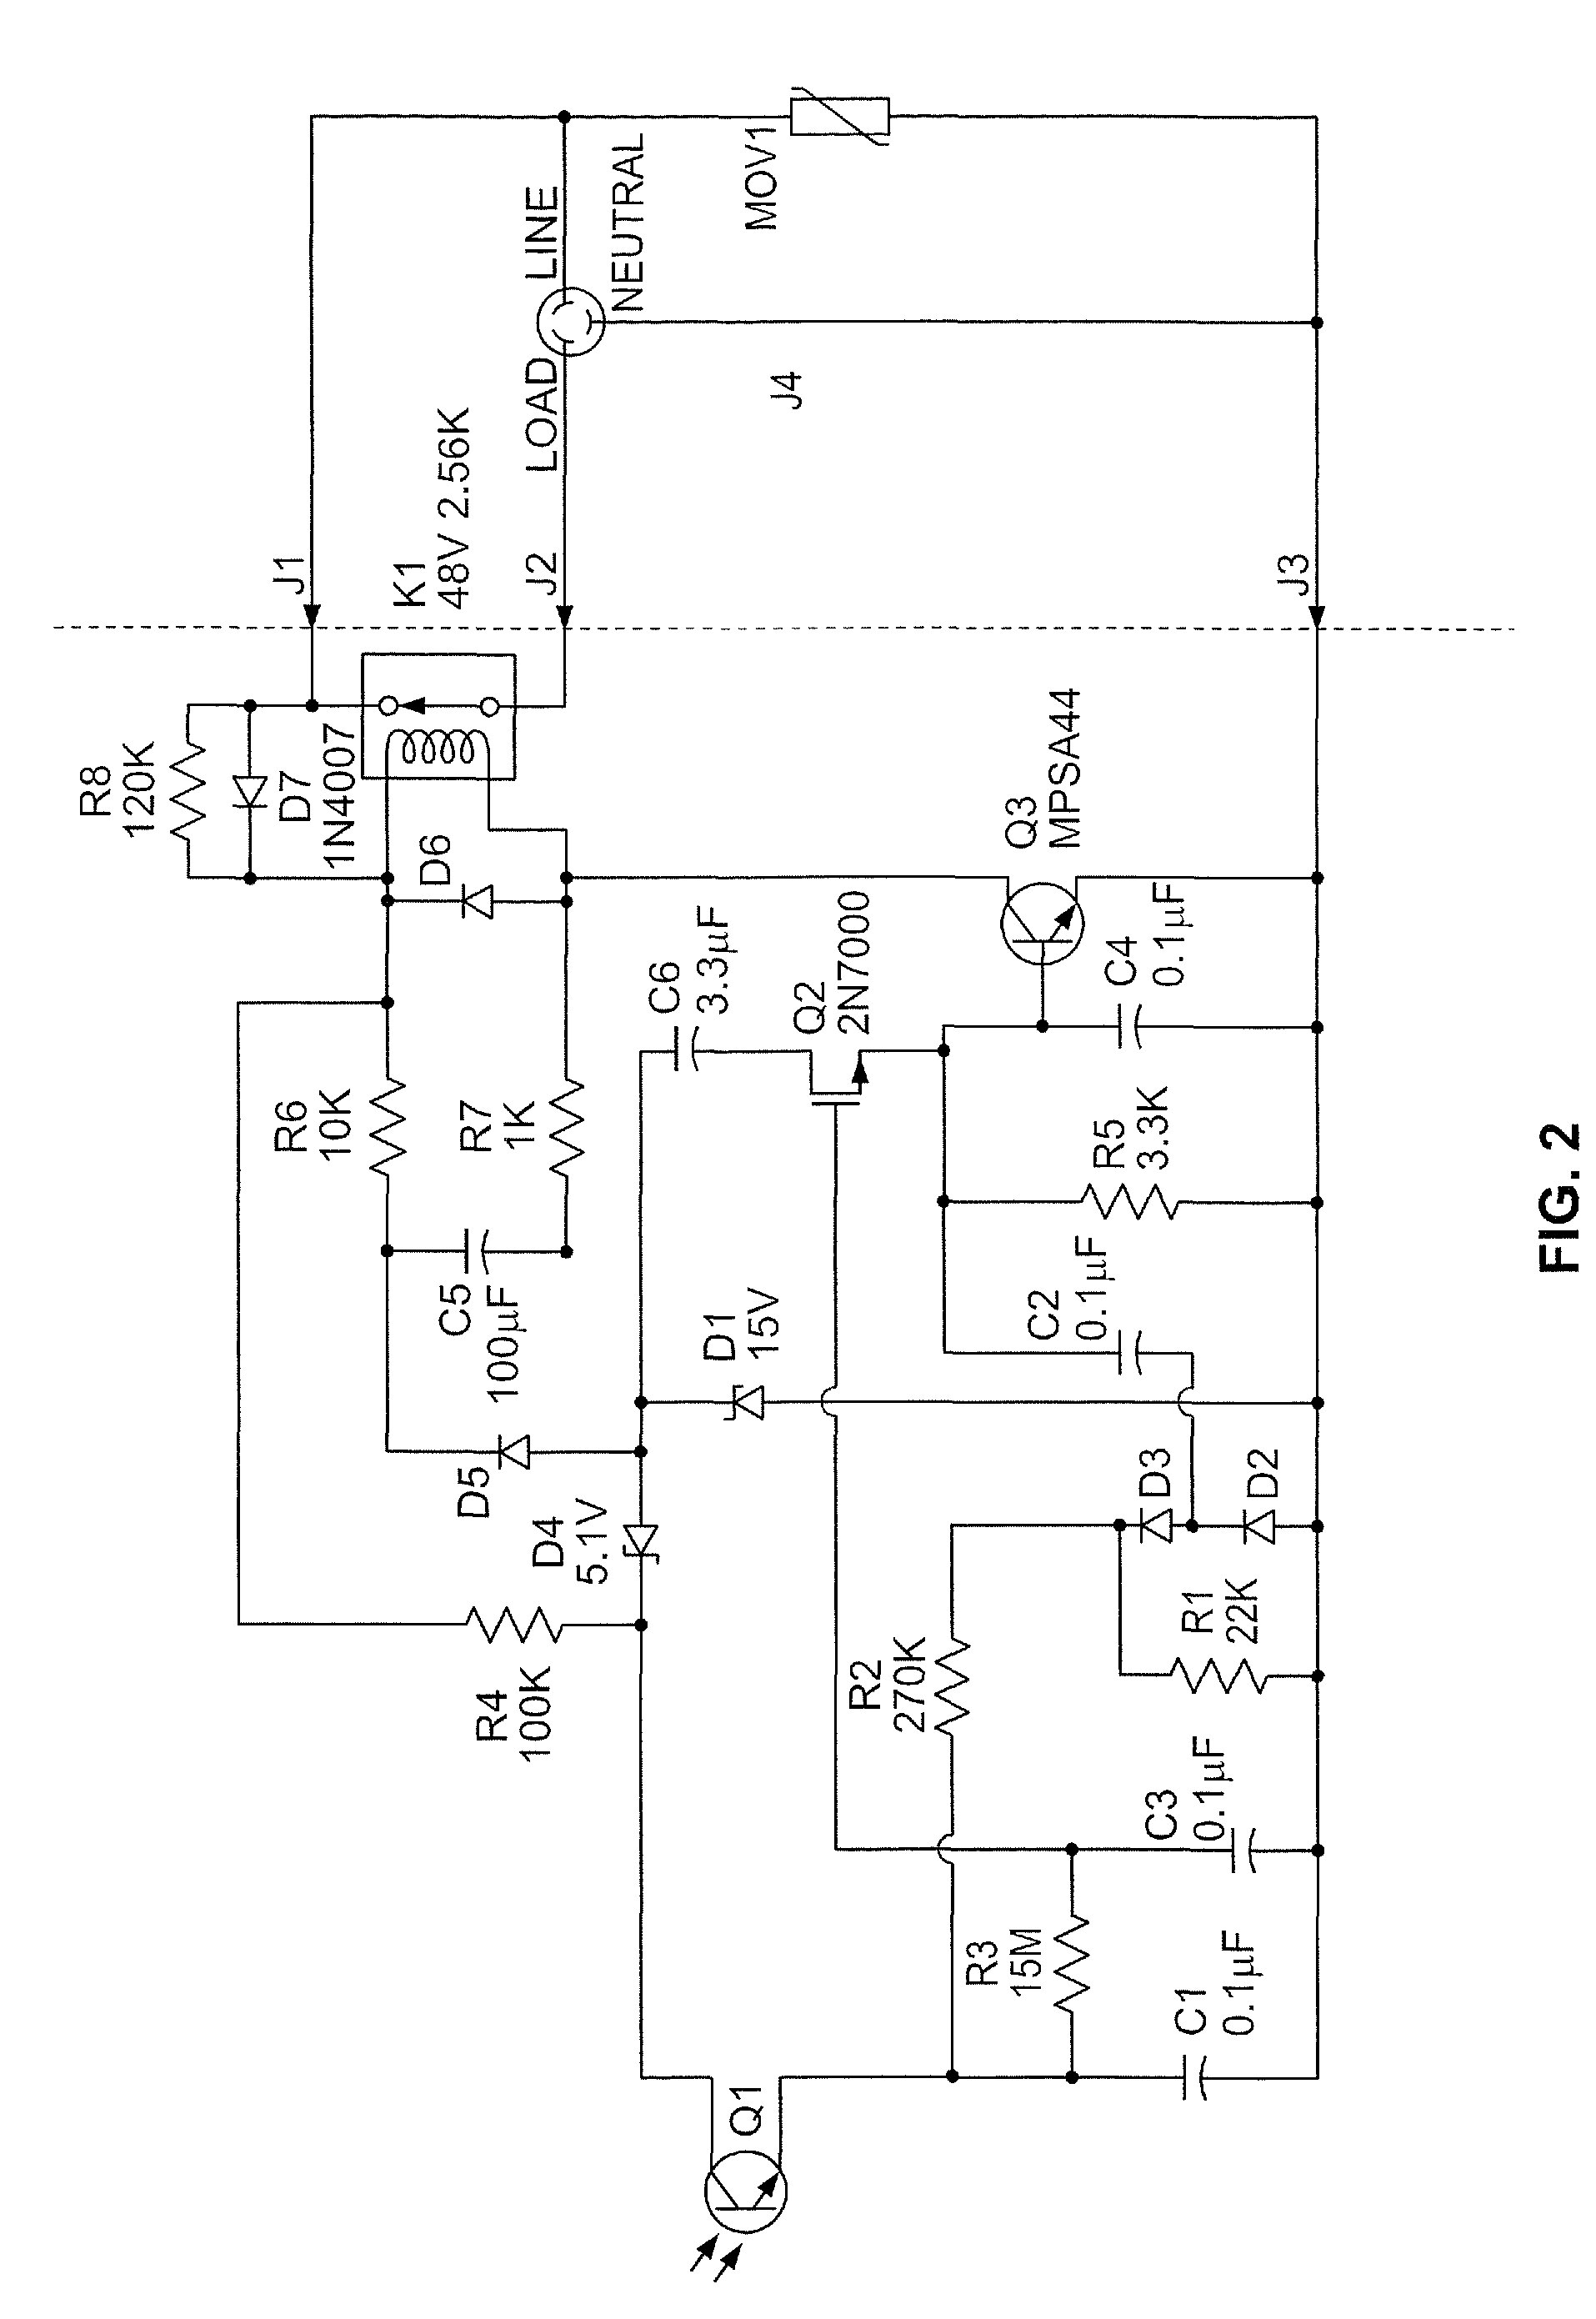 Photosensor circuits including a switch mode power converter